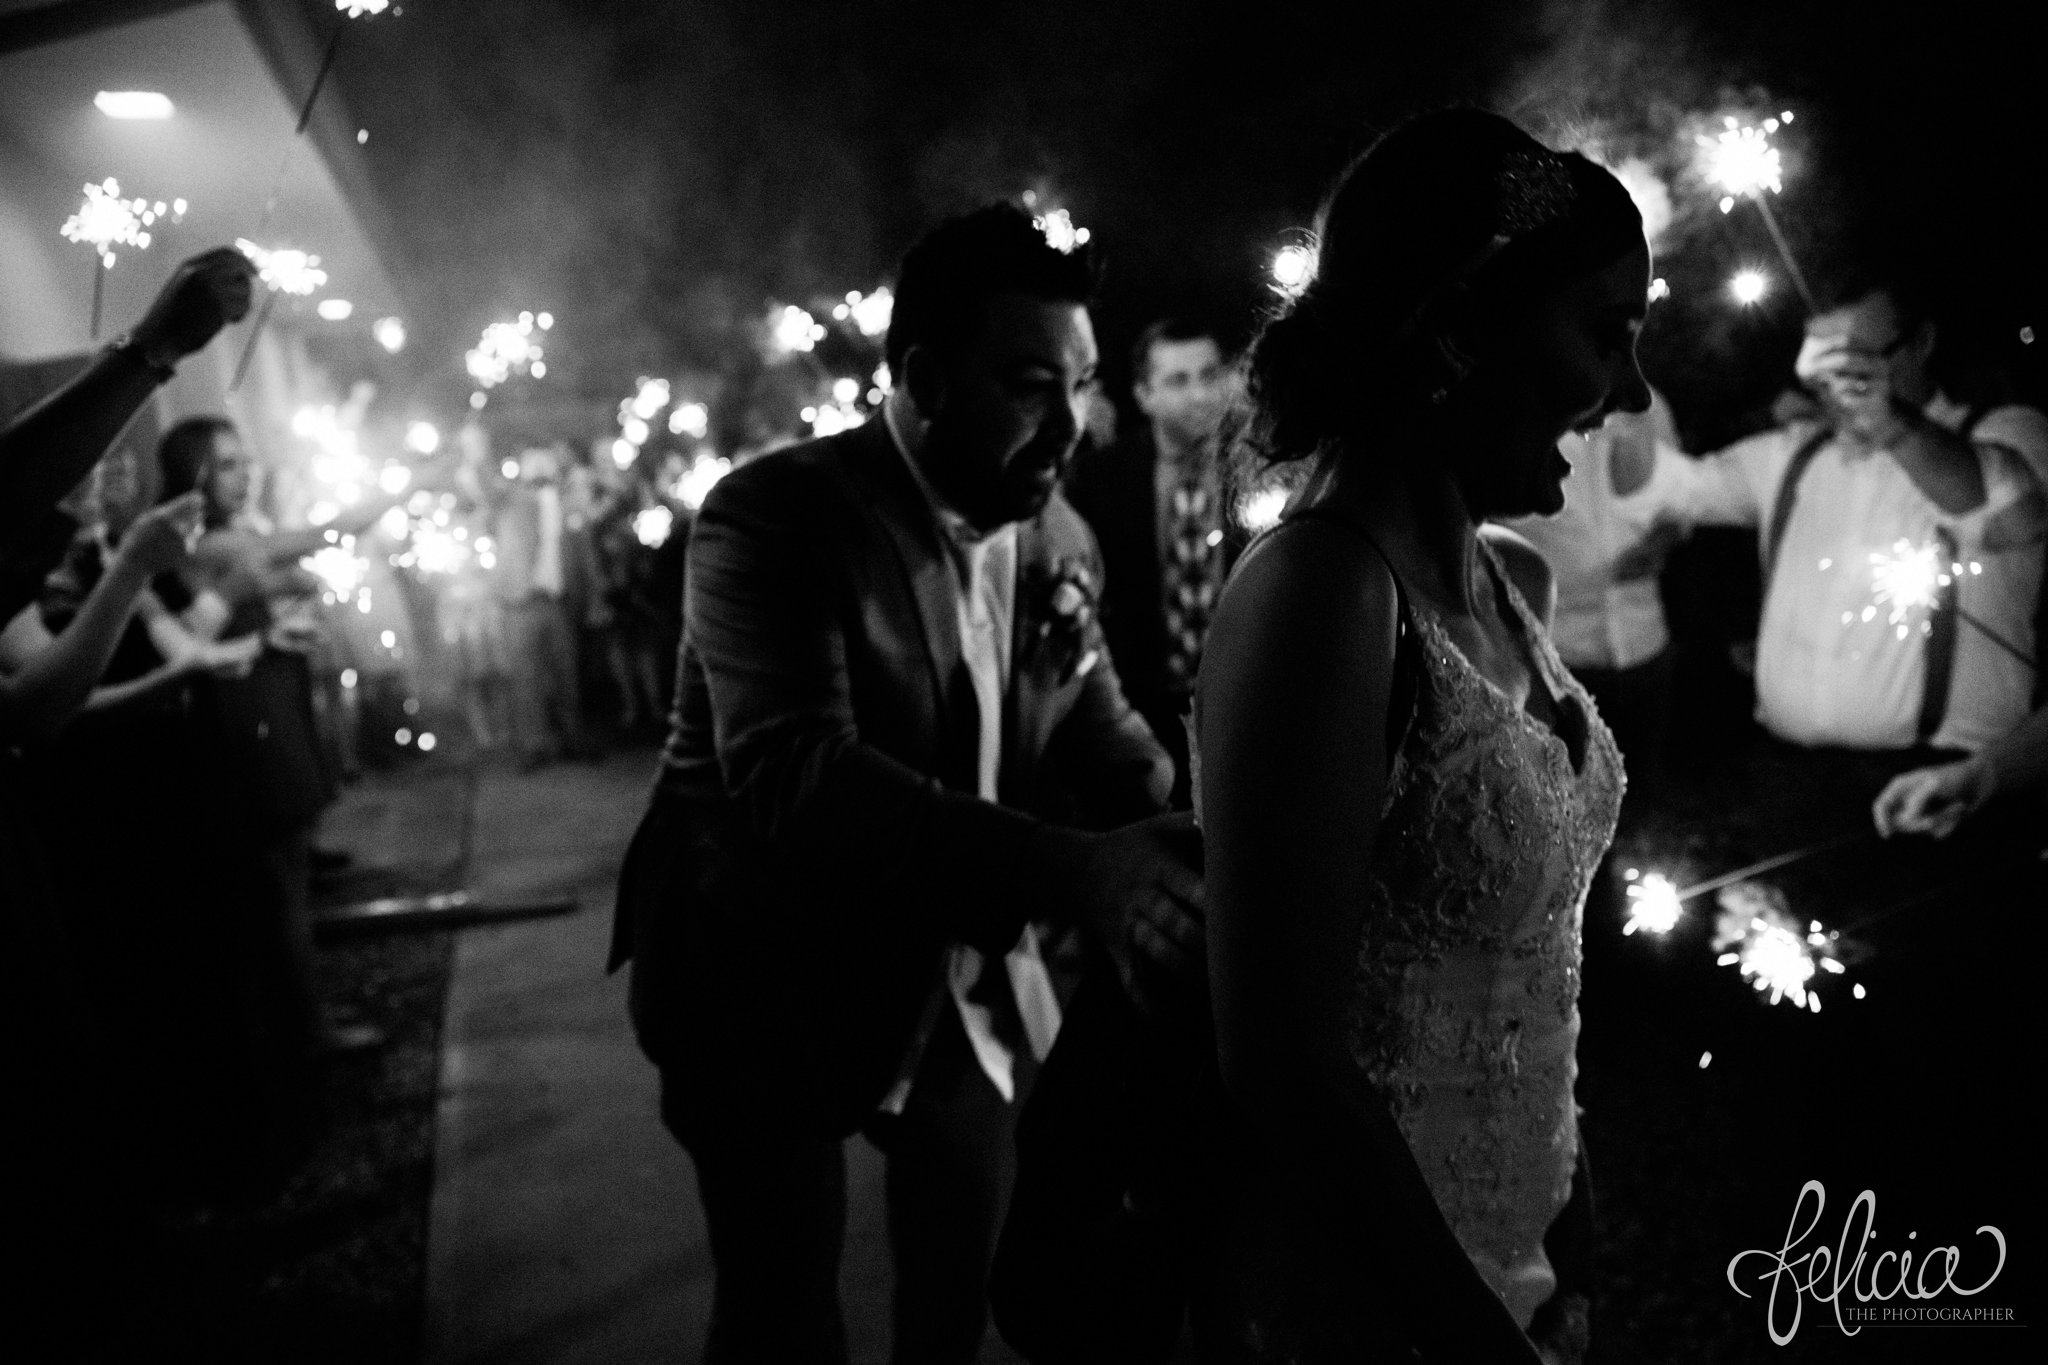 Black and White | Wedding | Wedding Photography | Wedding Photos | Travel Photographer | Images by feliciathephotographer.com | Kansas | Wedding Reception | Departure | Bride and Groom | Sparkler | Sparkler Exit 